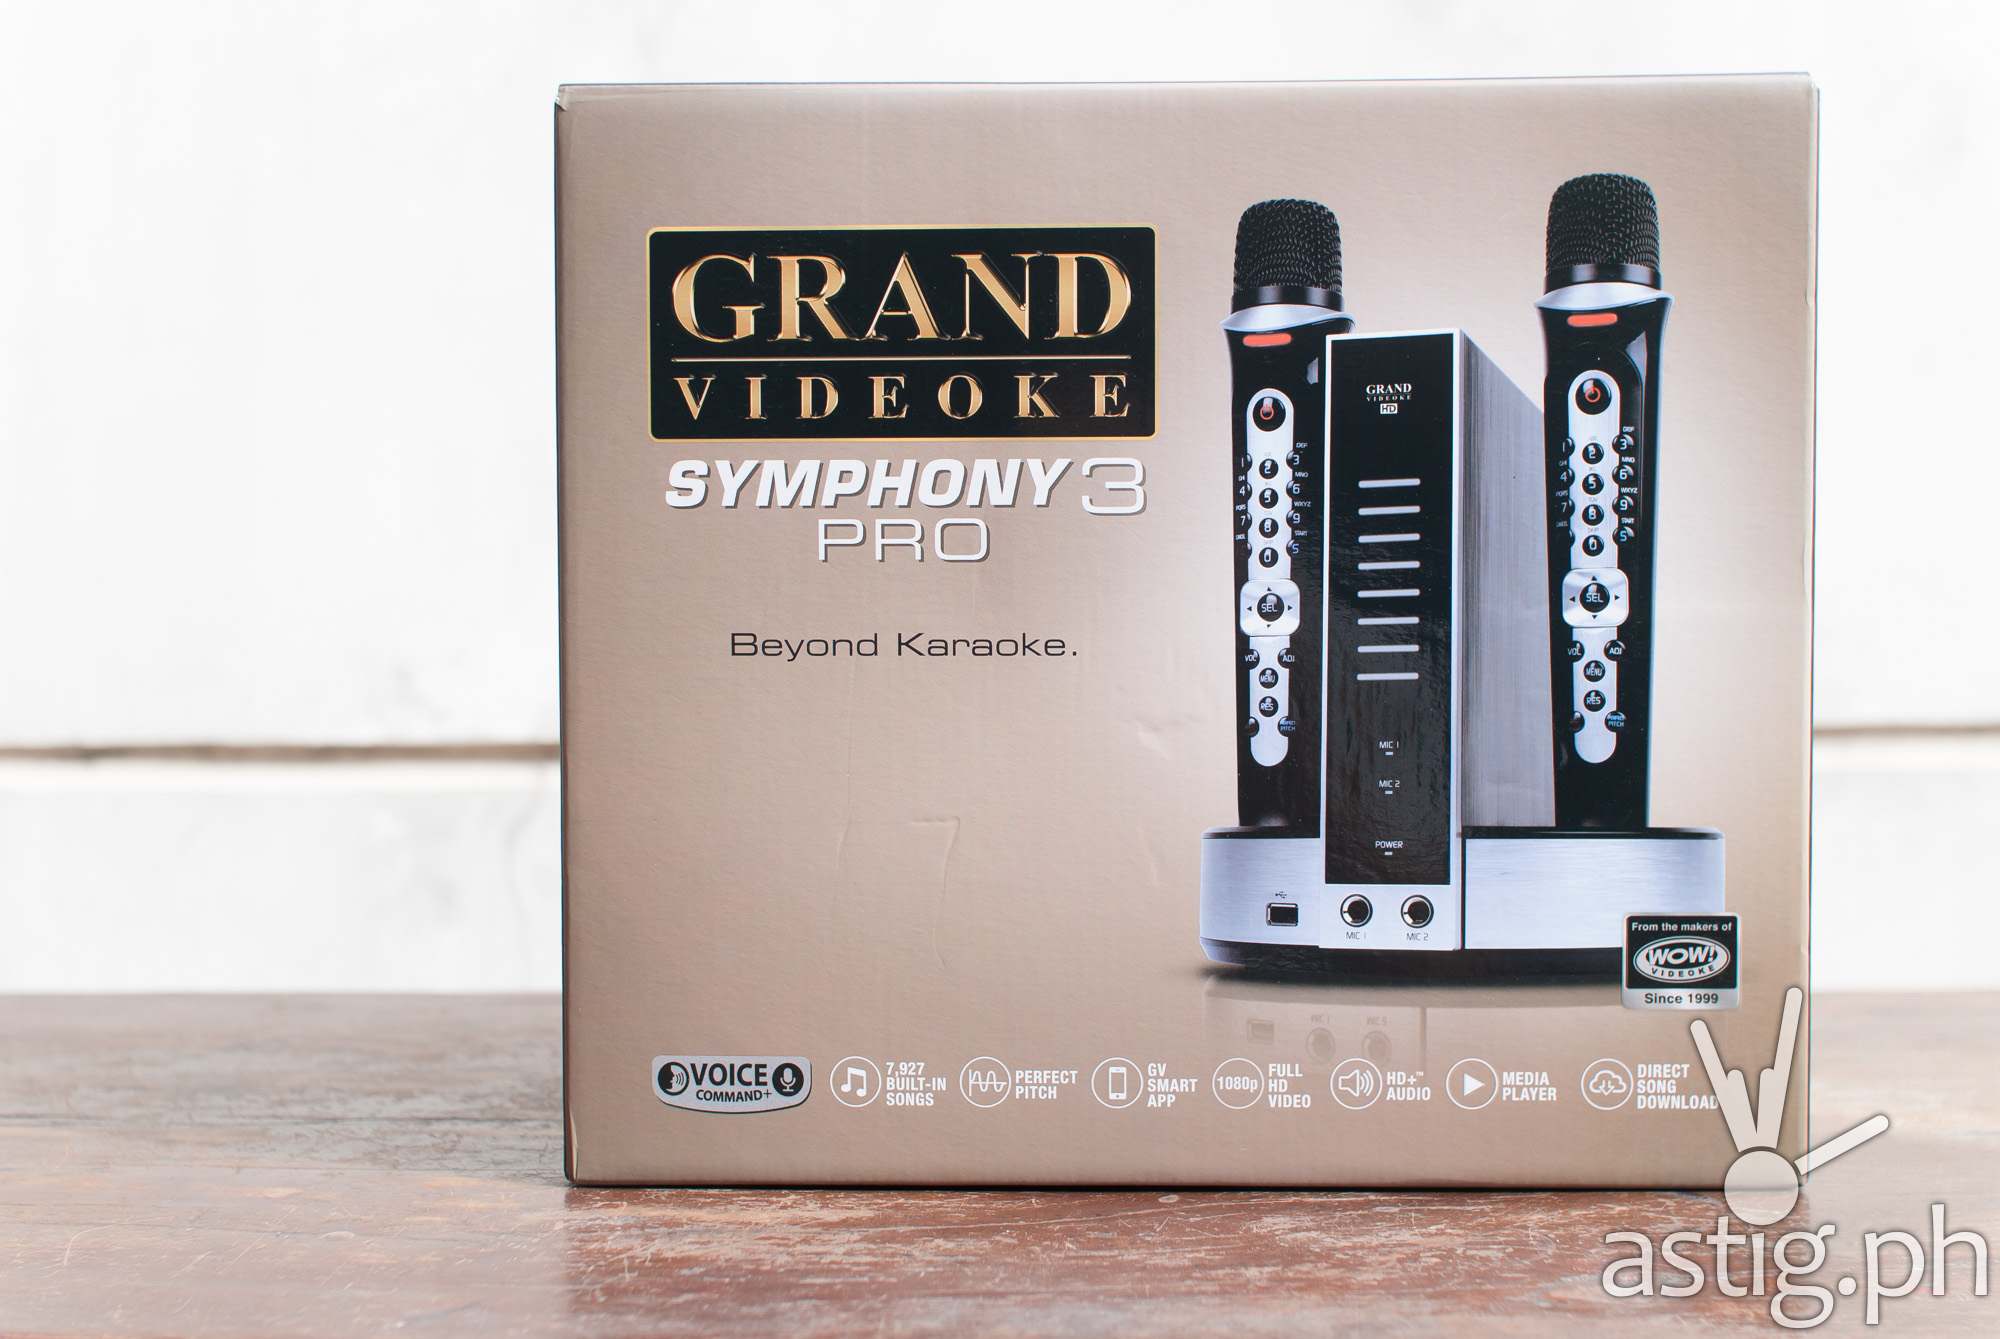 Grand Videoke Symphony 3 Pro box